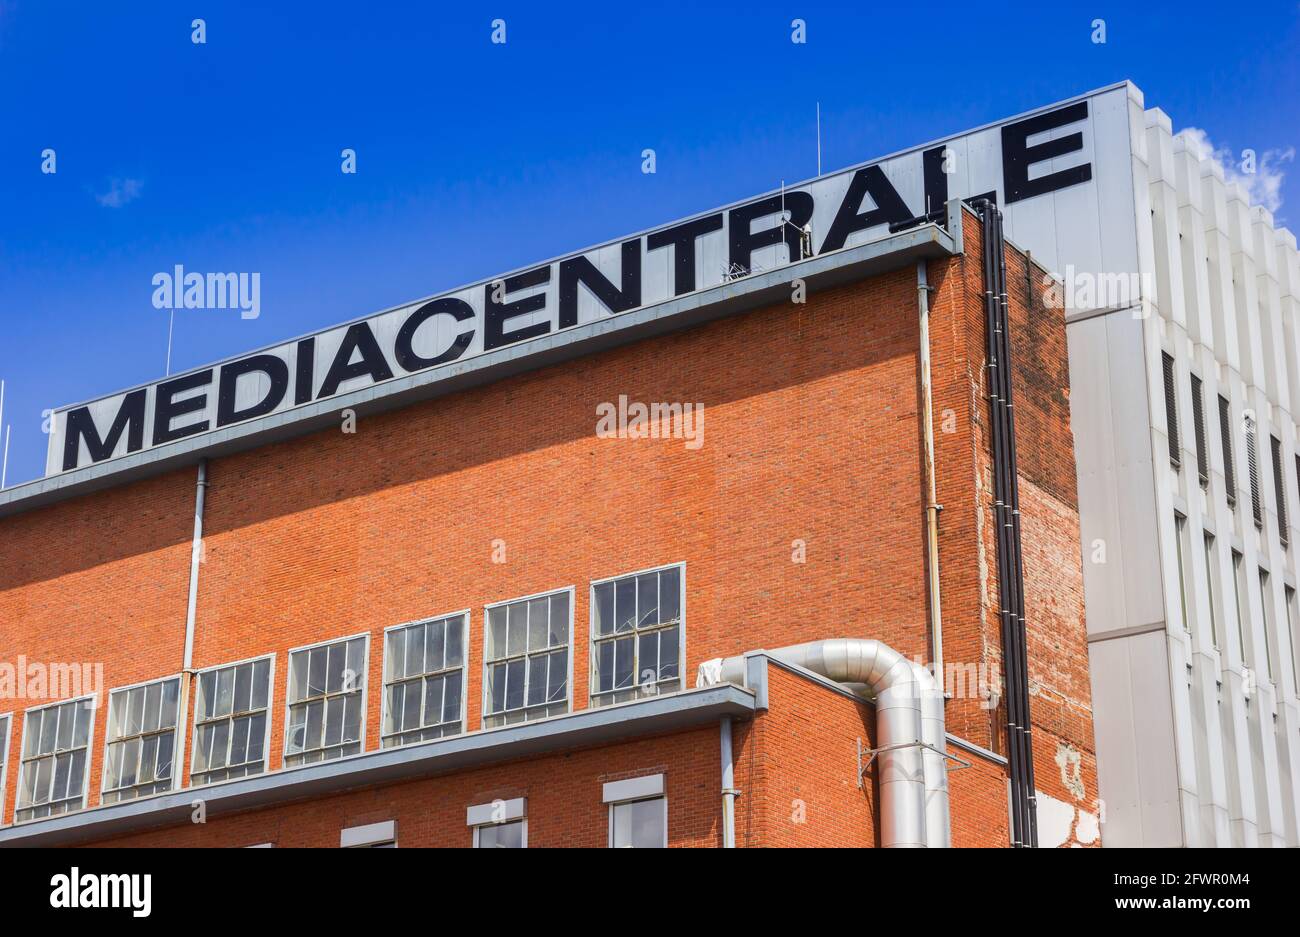 Building name on the former energy plant Mediacentrale in Groningen, Netherlands Stock Photo